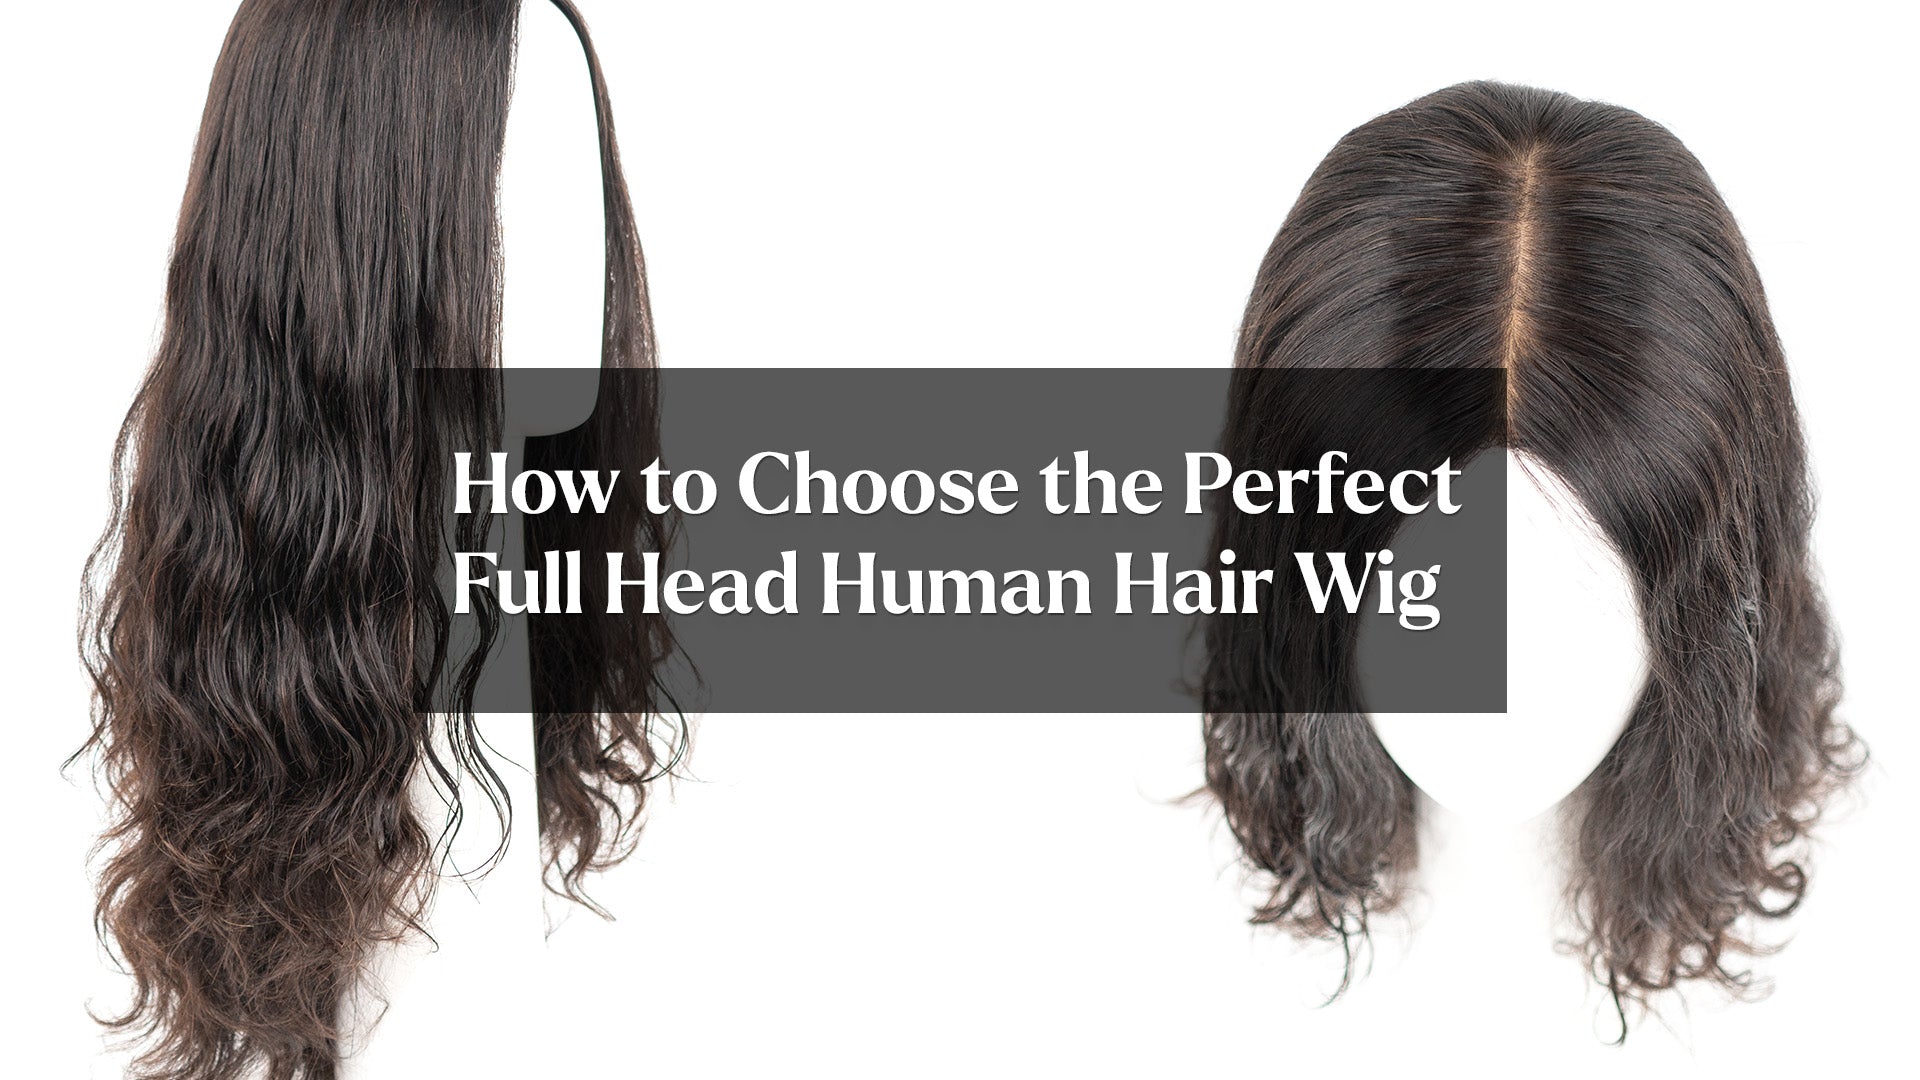 Choosing the Perfect Full Head Human Hair Wig: Factors to Consider